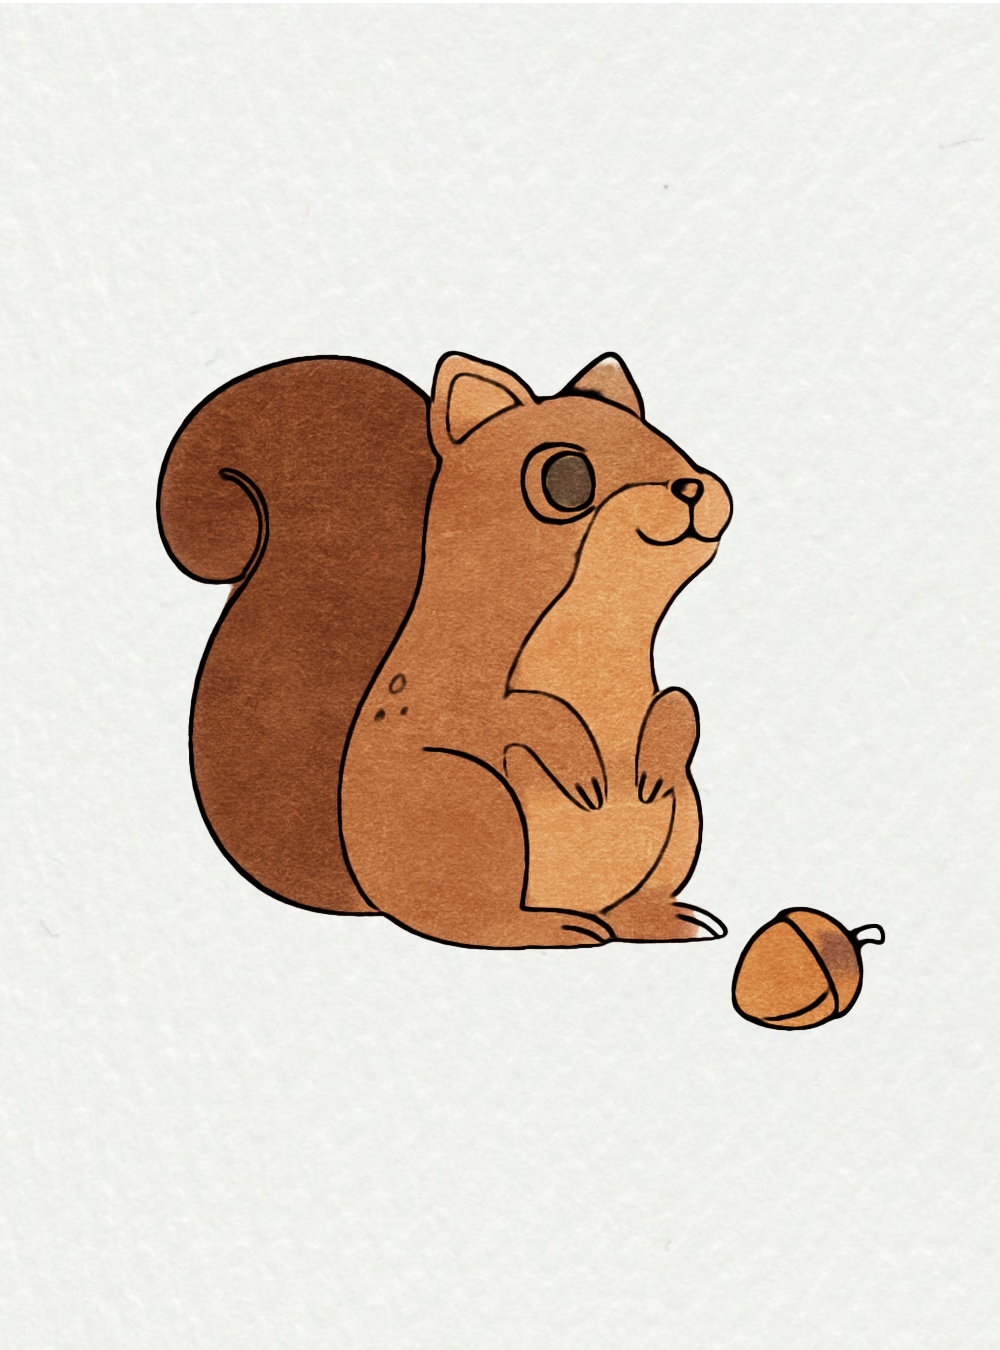 Easy Cute Forest Animal Drawing Ideas: Squirrel